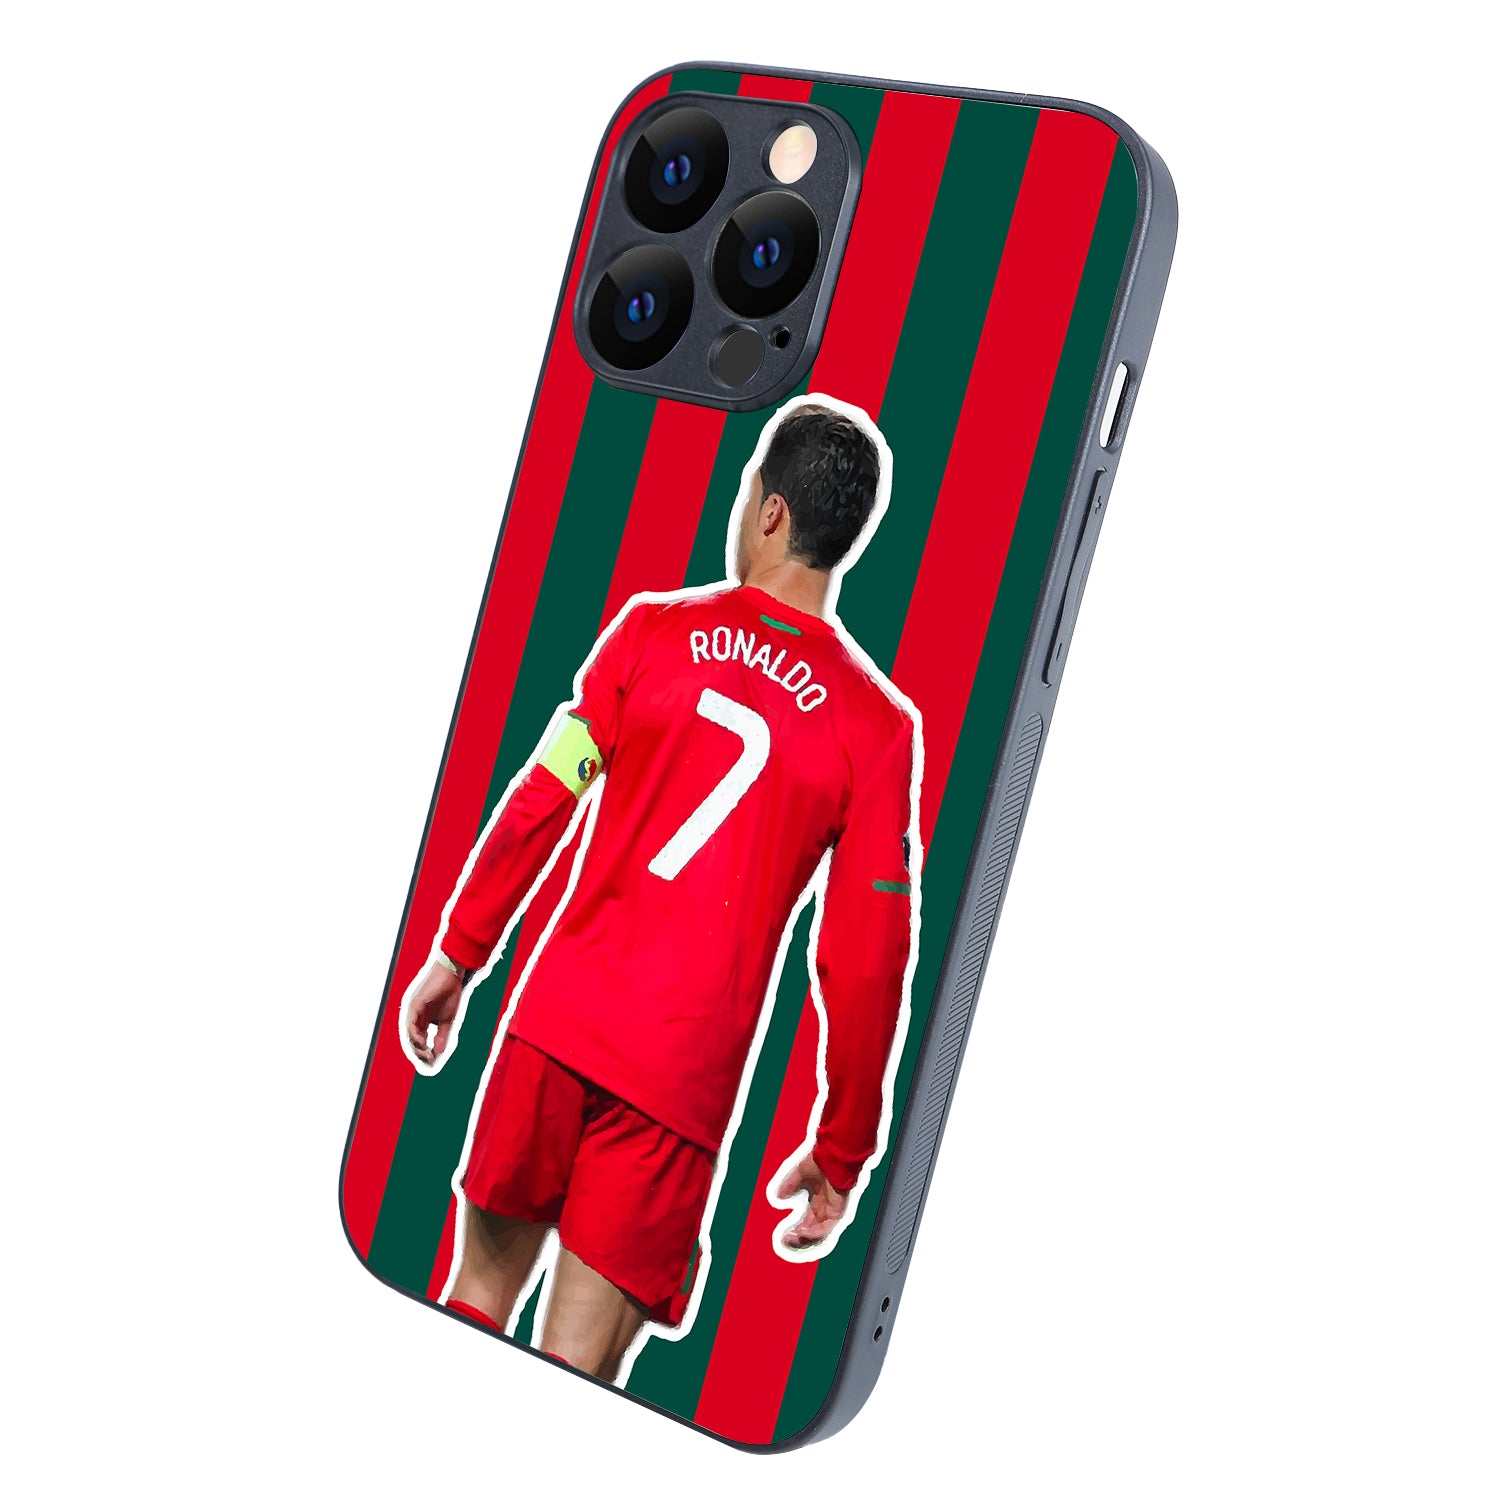 Ronaldo Sports Sports iPhone 13 Pro Max Case